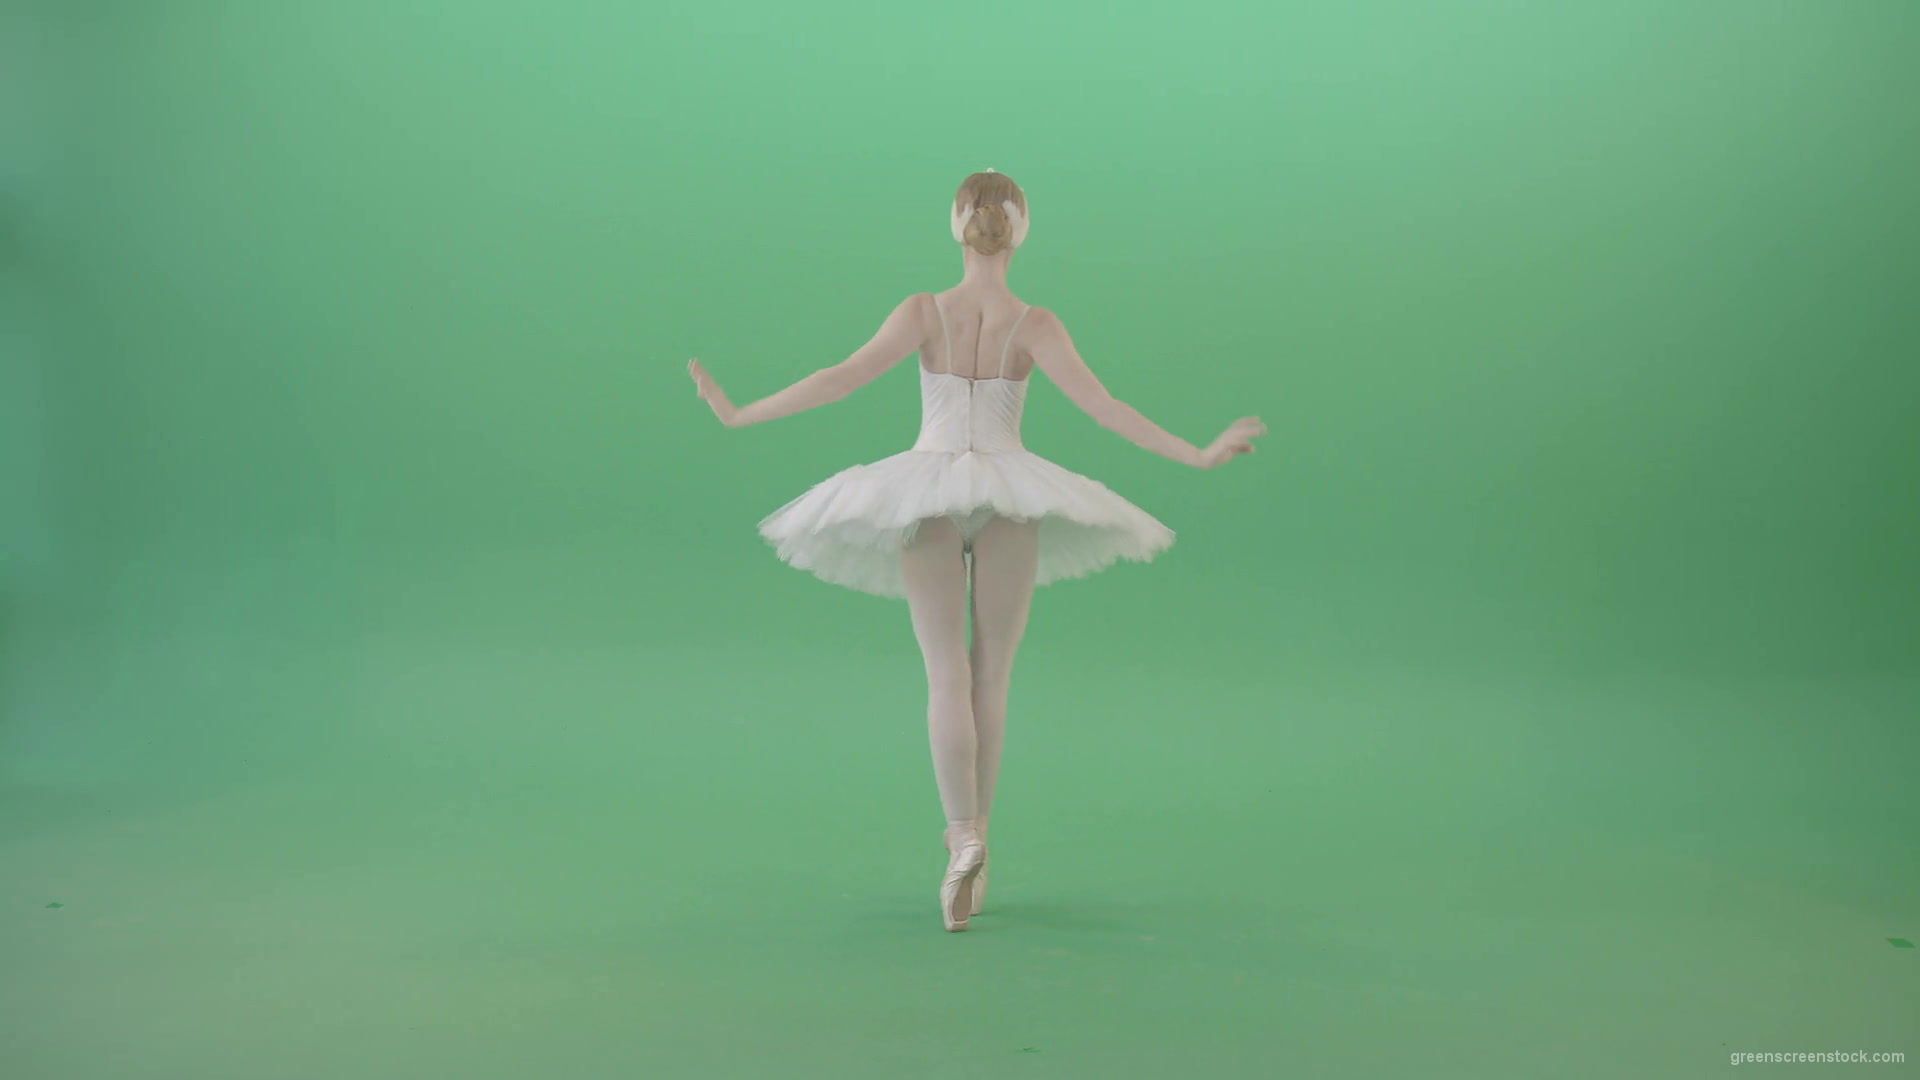 vj video background Beautiful-swan-lake-ballet-dance-ballerina-in-back-side-view-dancing-on-green-screen-4K-Video-Footage-1920_003